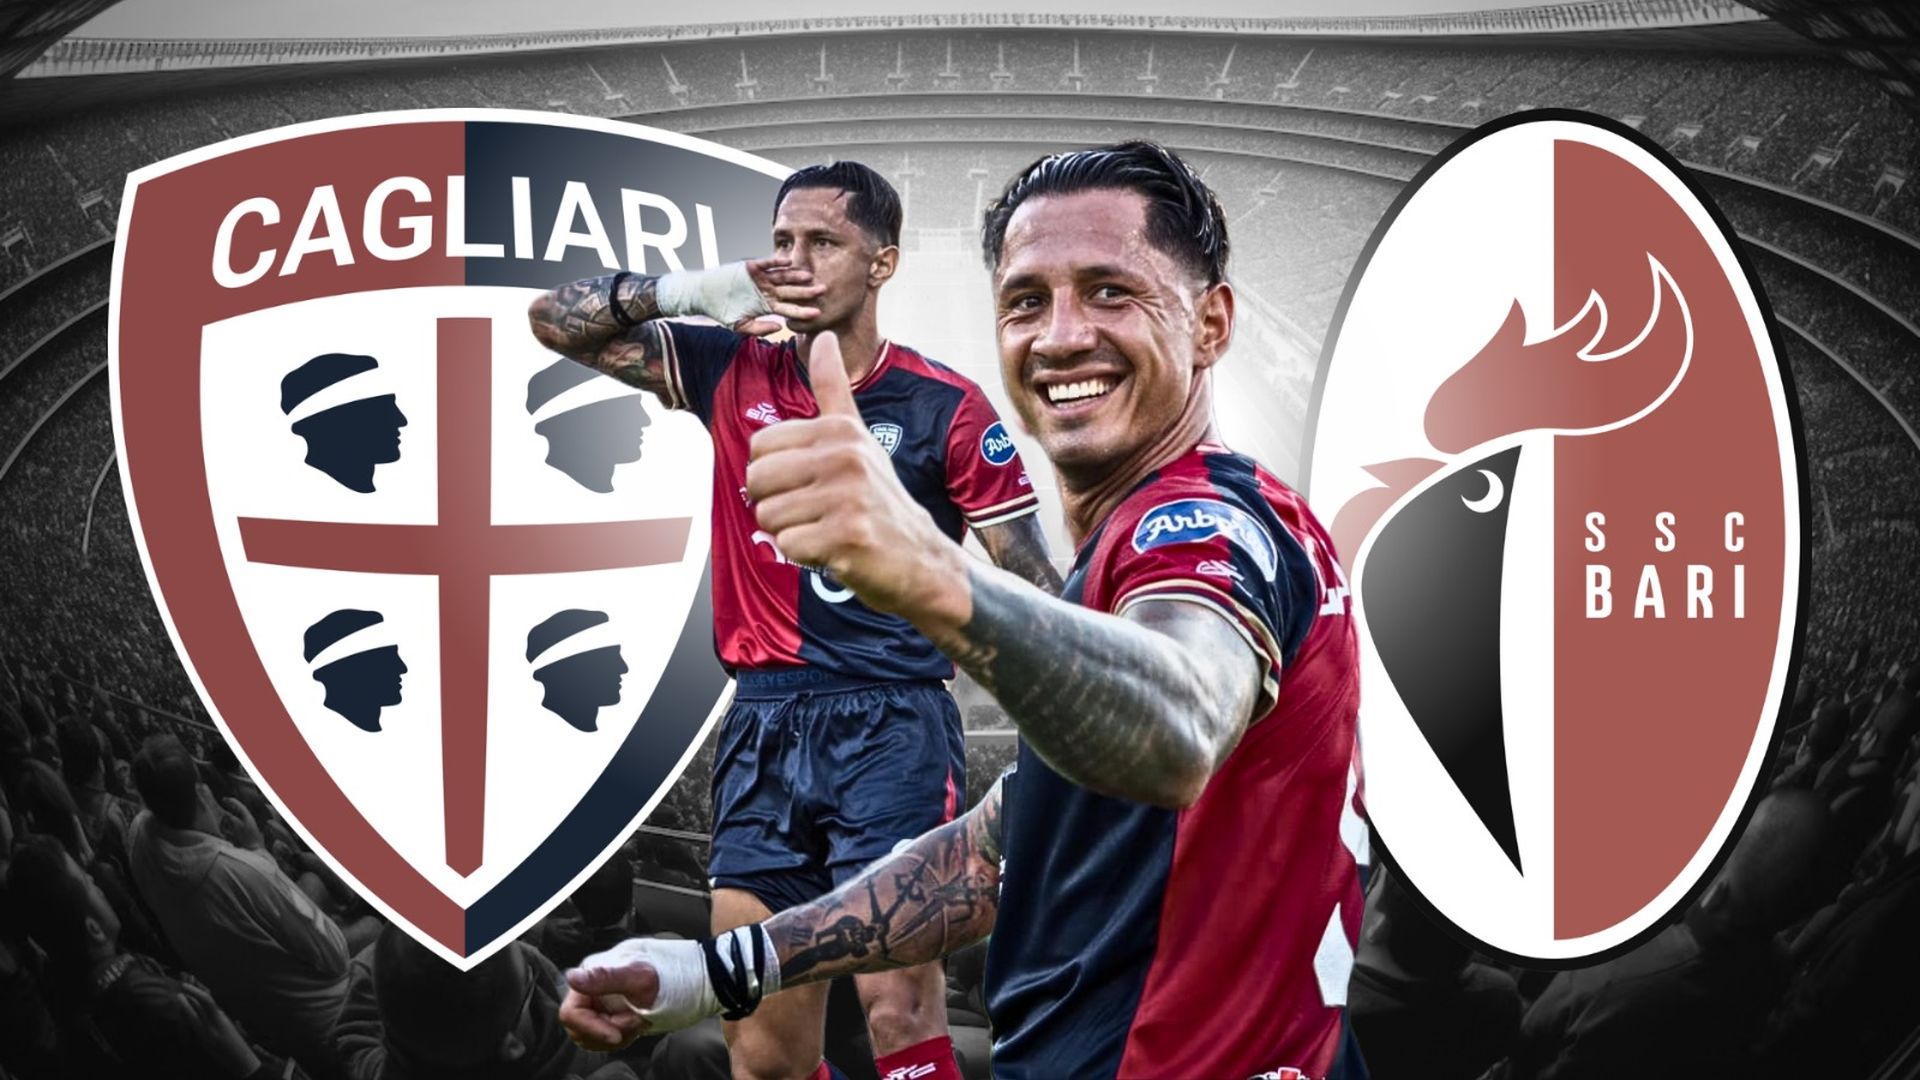 Cagliari vs Bari EN VIVO AHORA: con Gianluca Lapadula, final ida de ascenso en Serie B